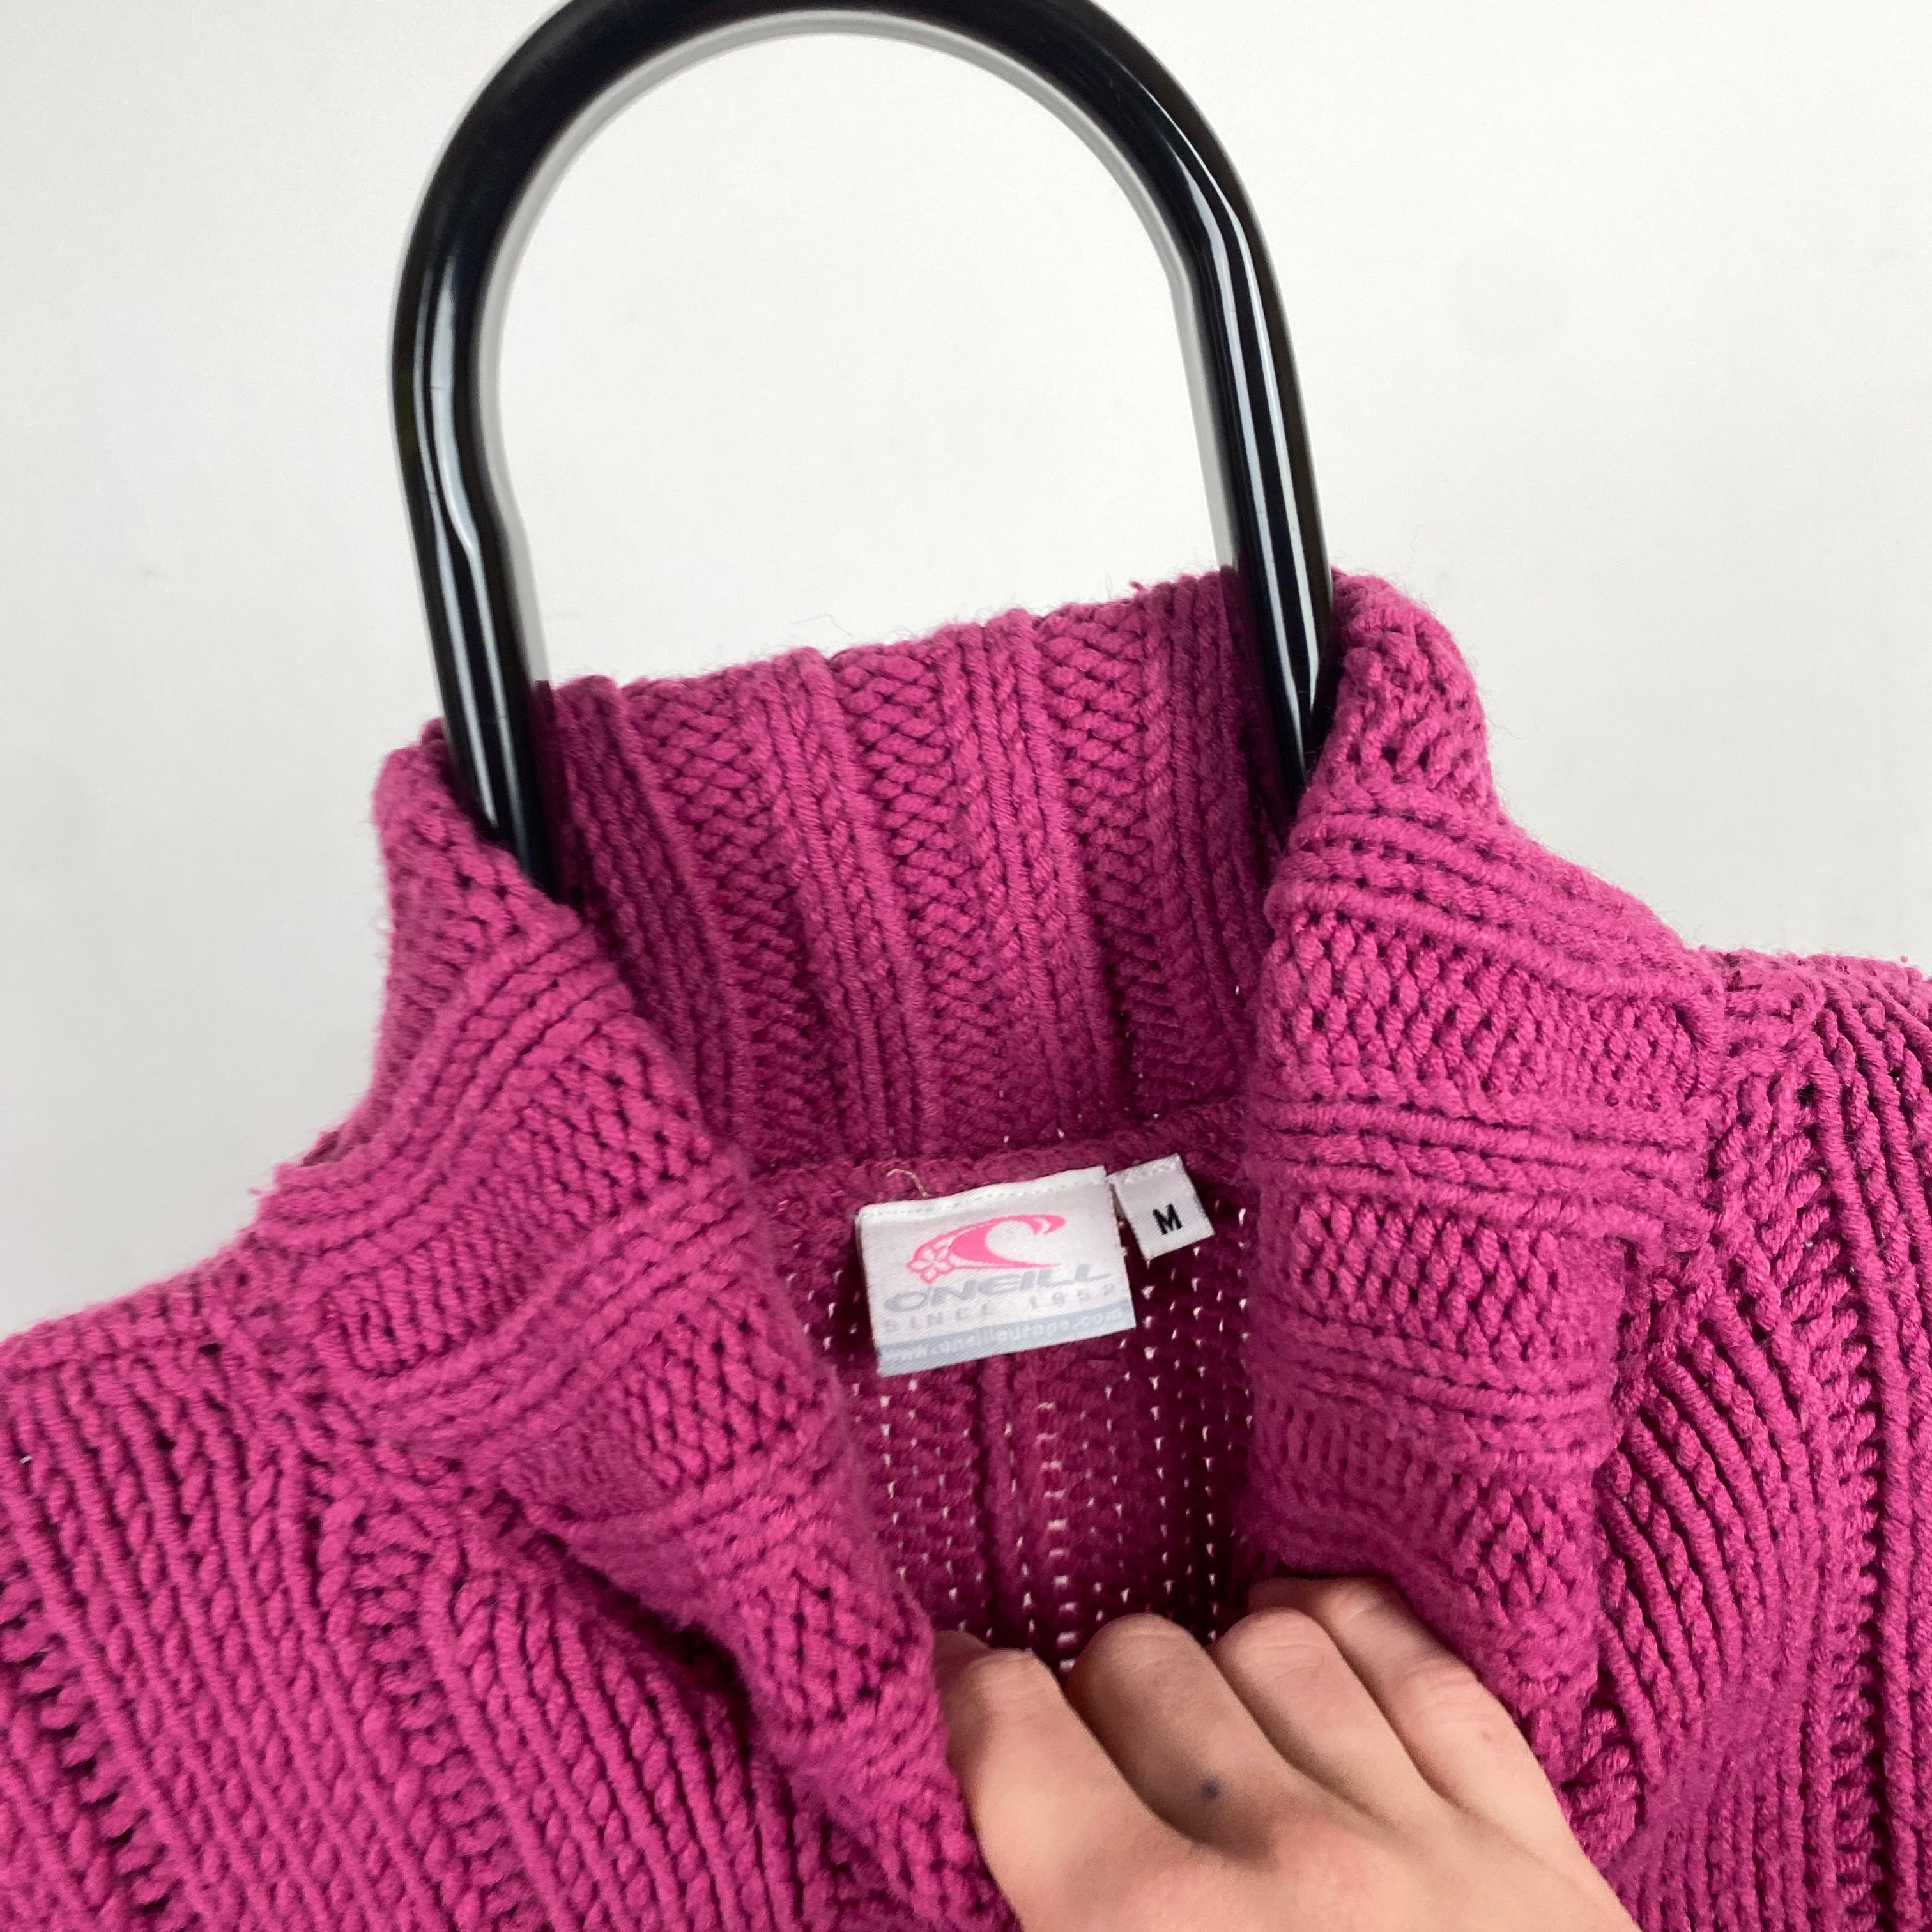 Retro O’Neill Knit Sweatshirt Pink Medium